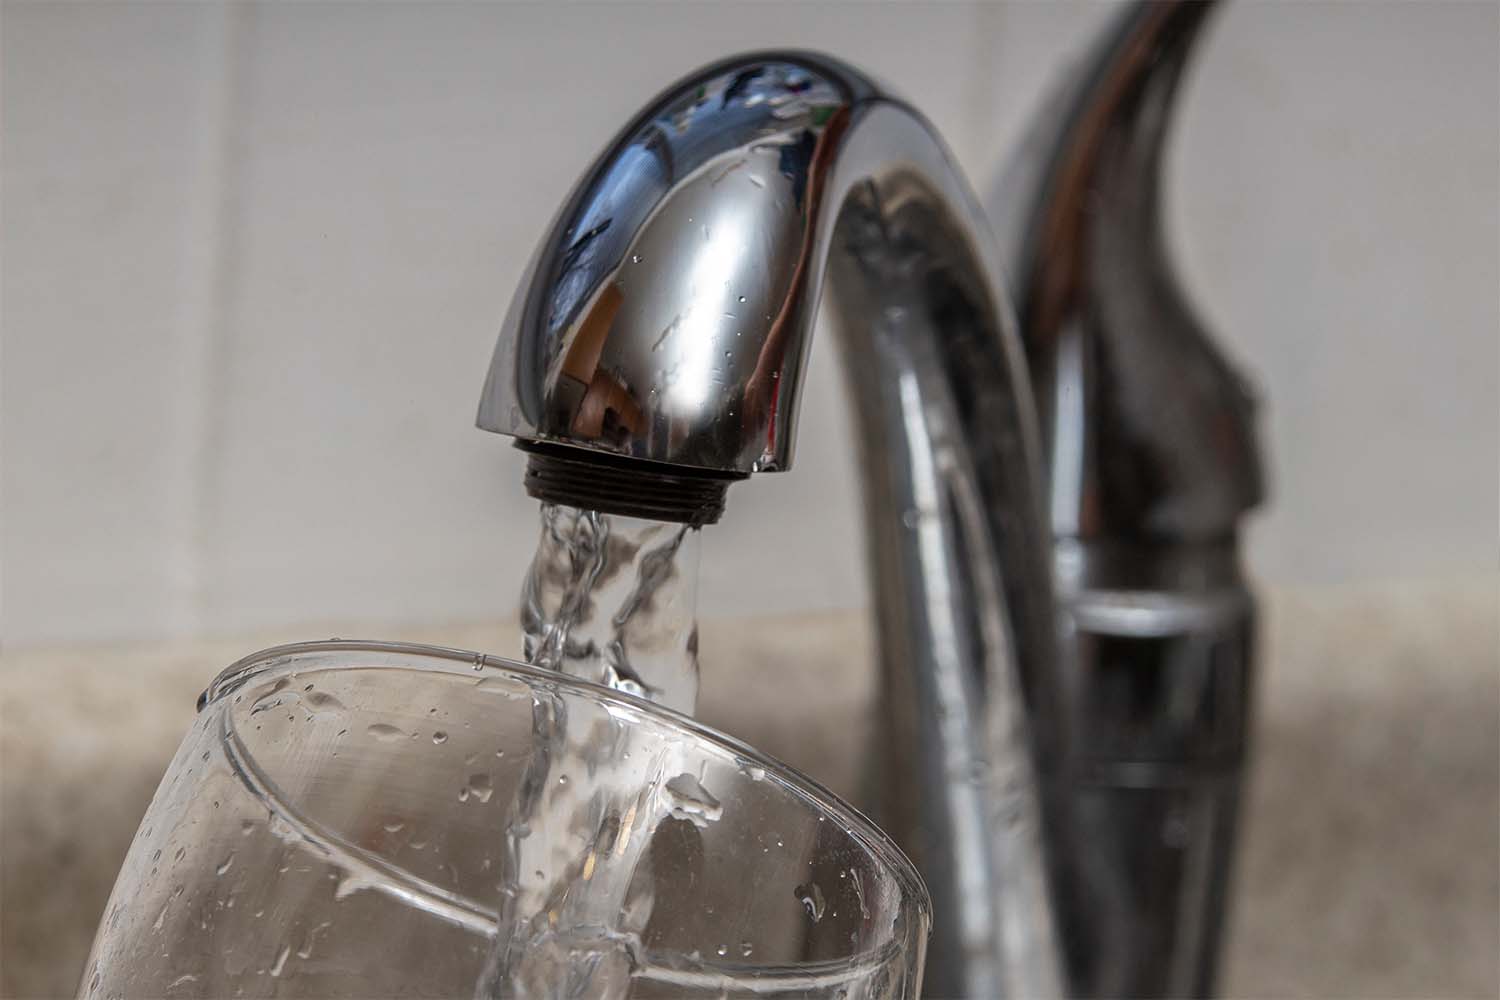 VA Compensation for Camp Lejeune Water Contamination